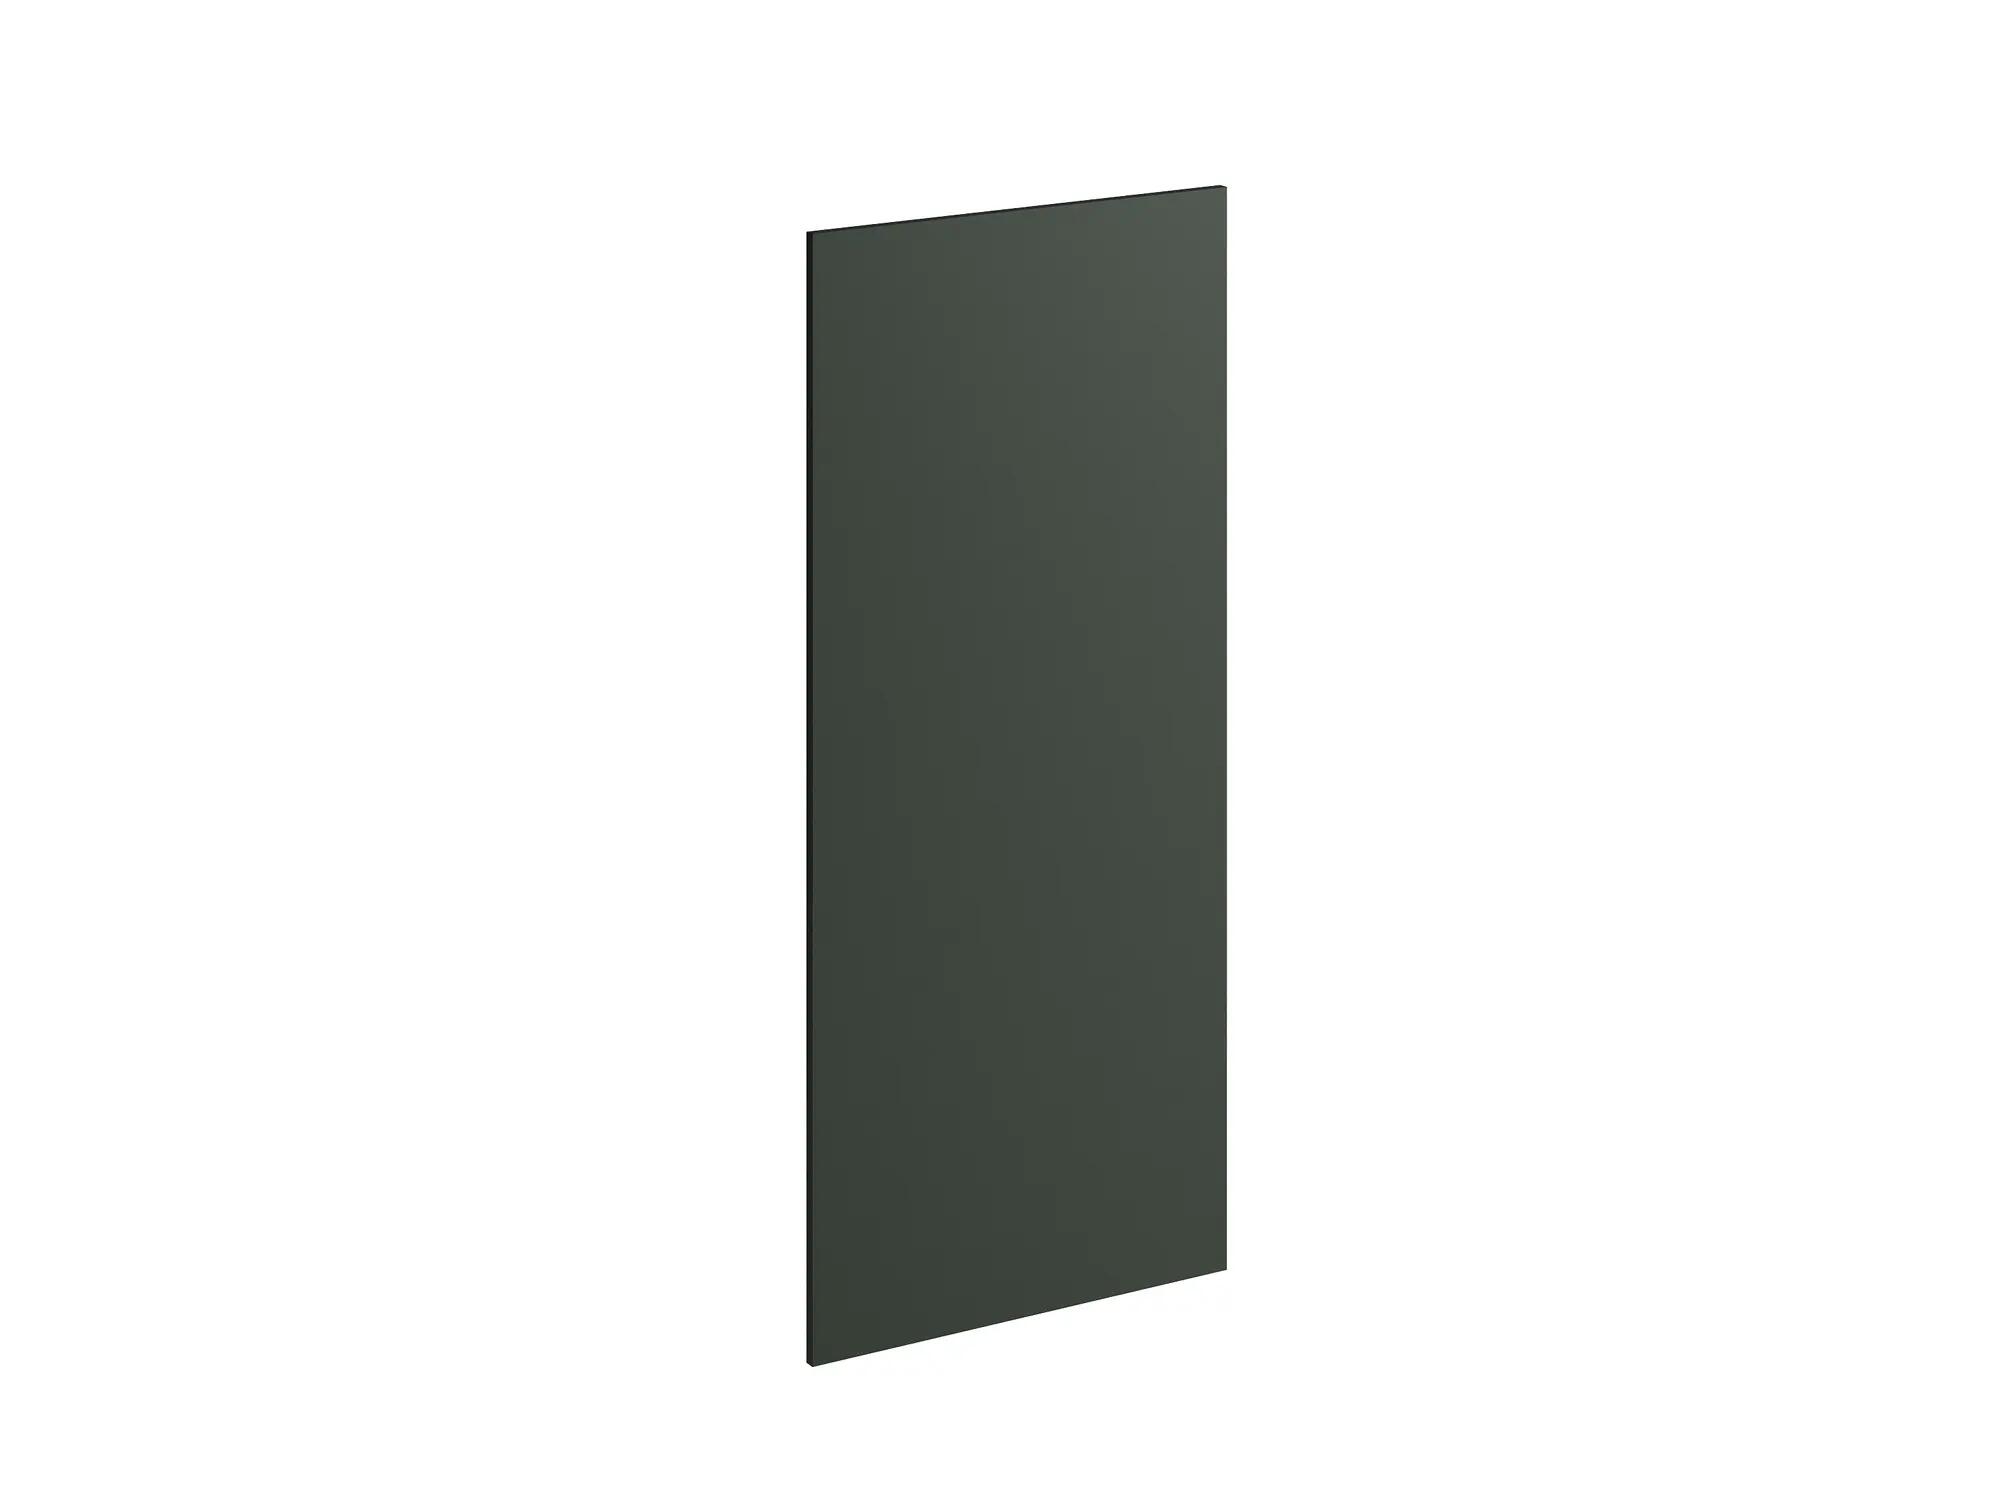 Puerta para mueble de cocina atenas verde mate h 137.6 x l 60 cm